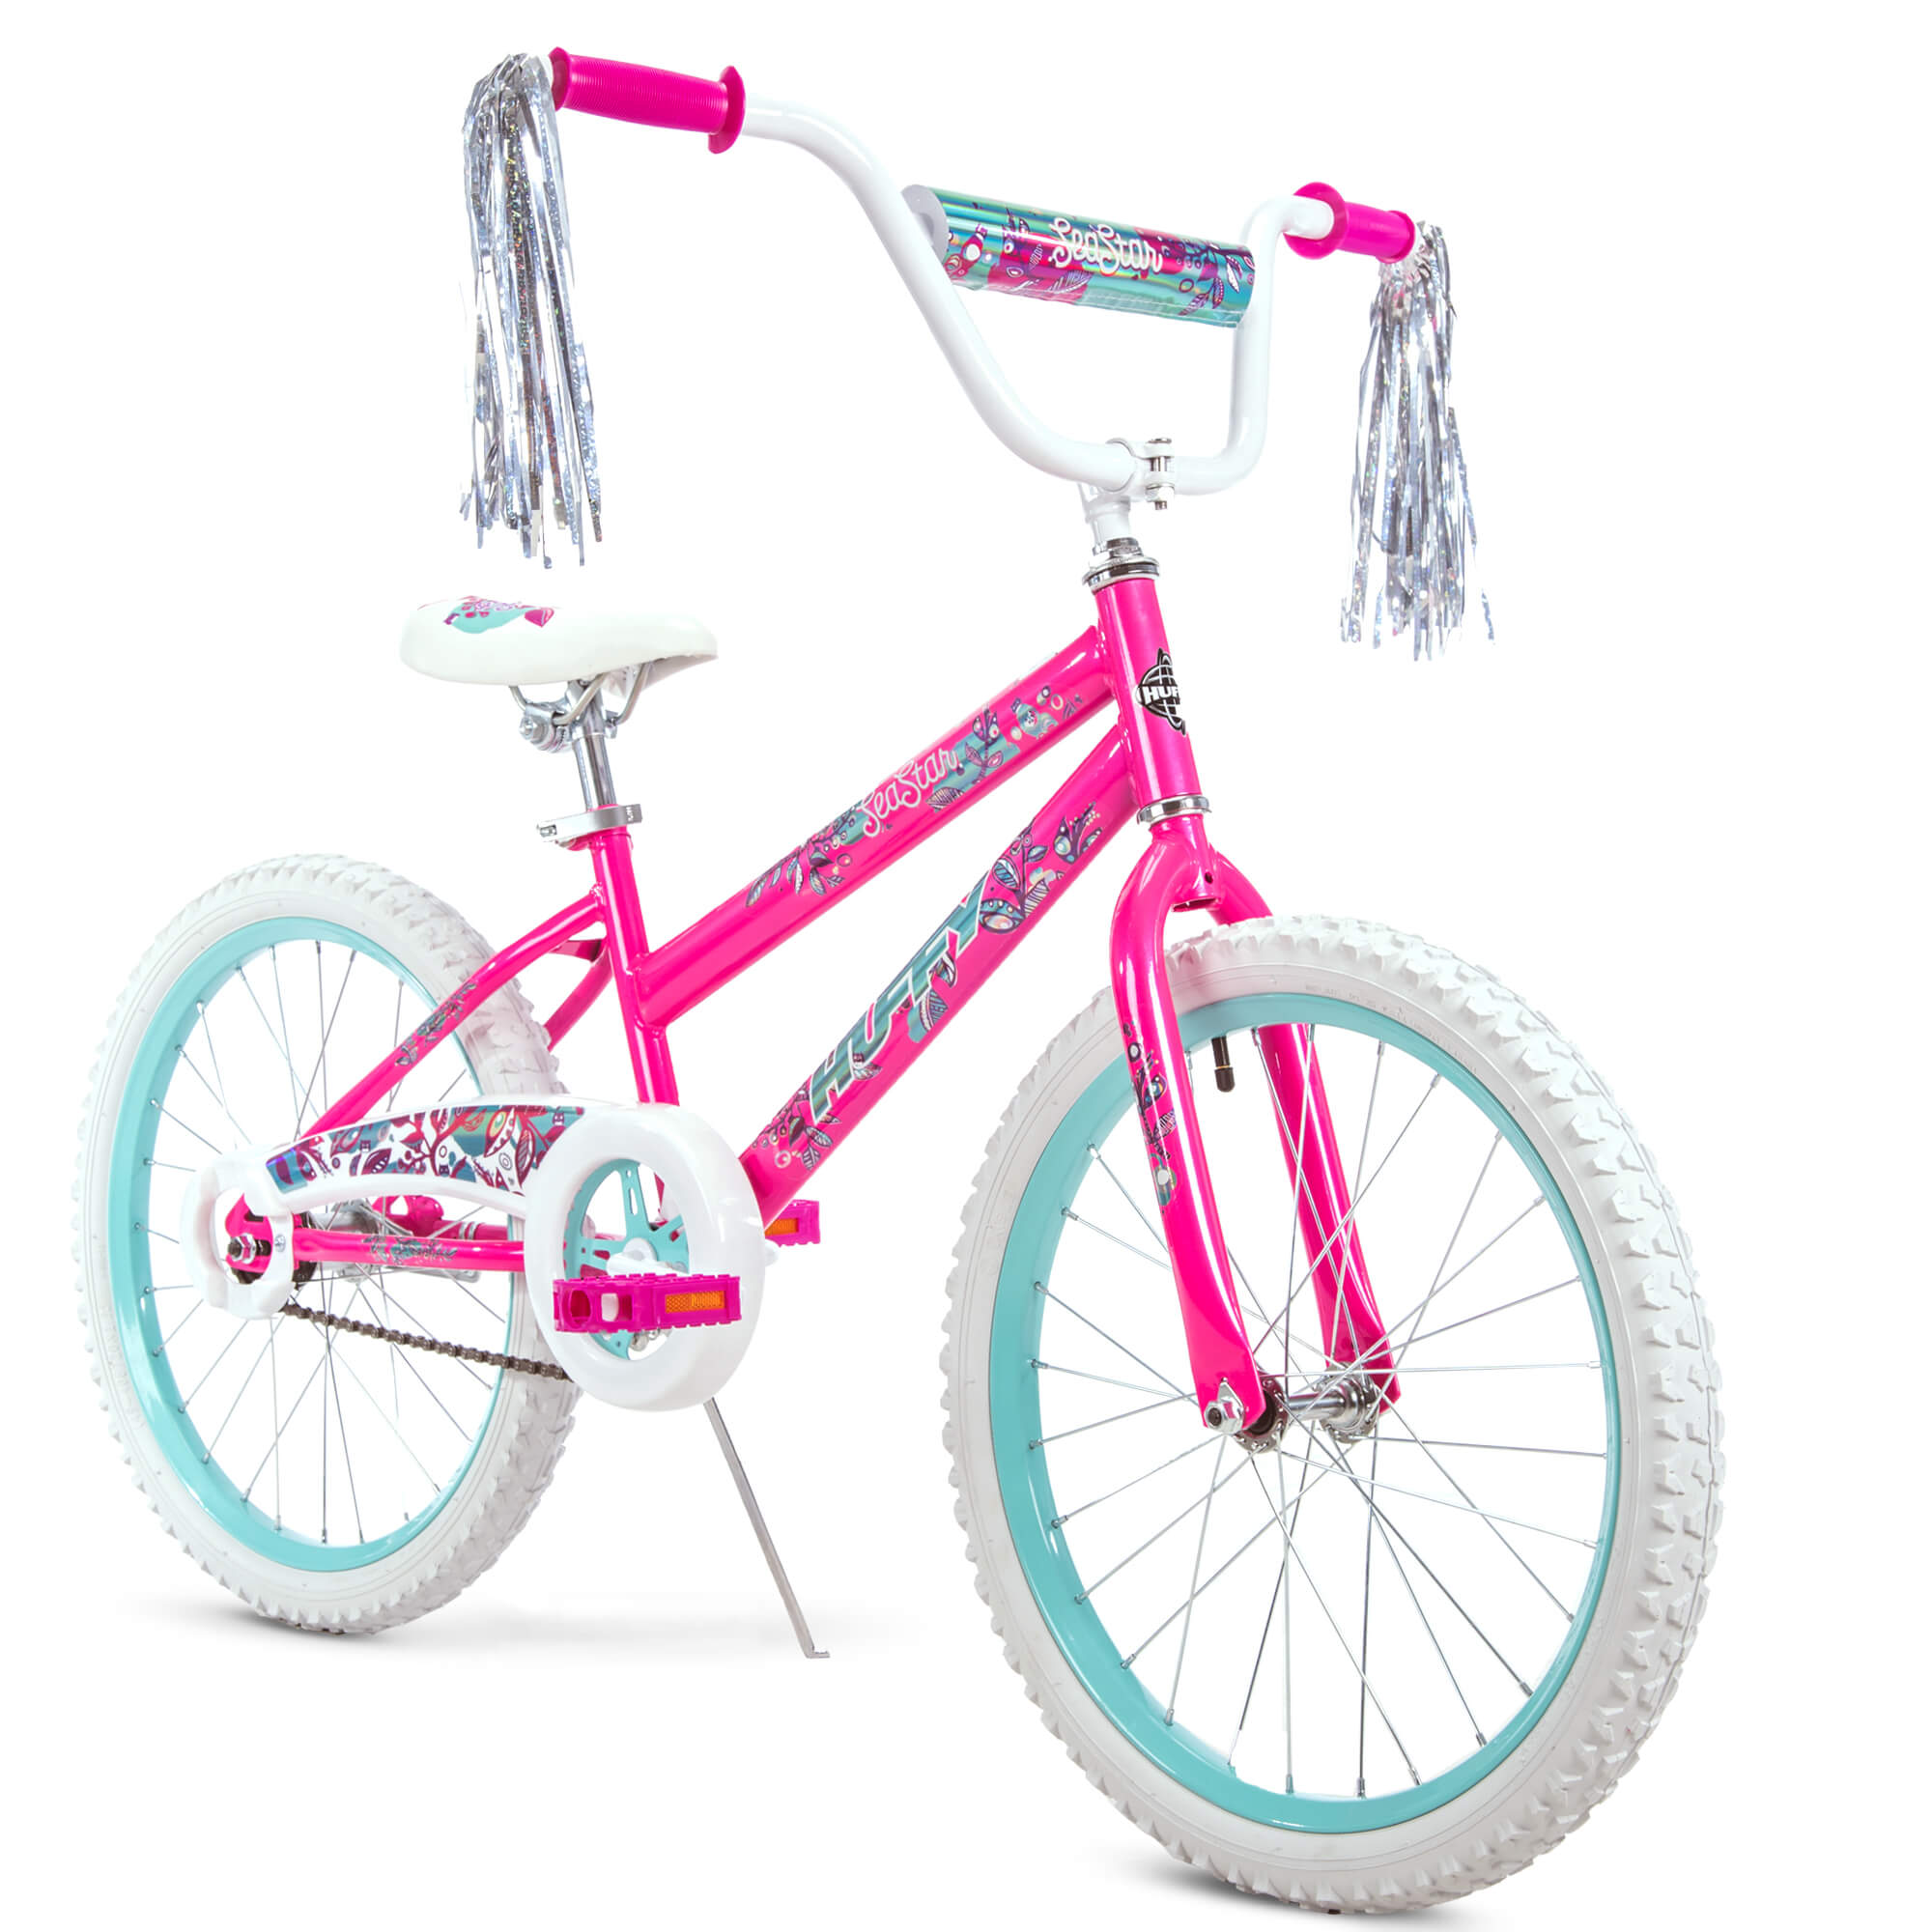 20" Huffy Girls' Sea Star Bike, Pink - image 1 of 6